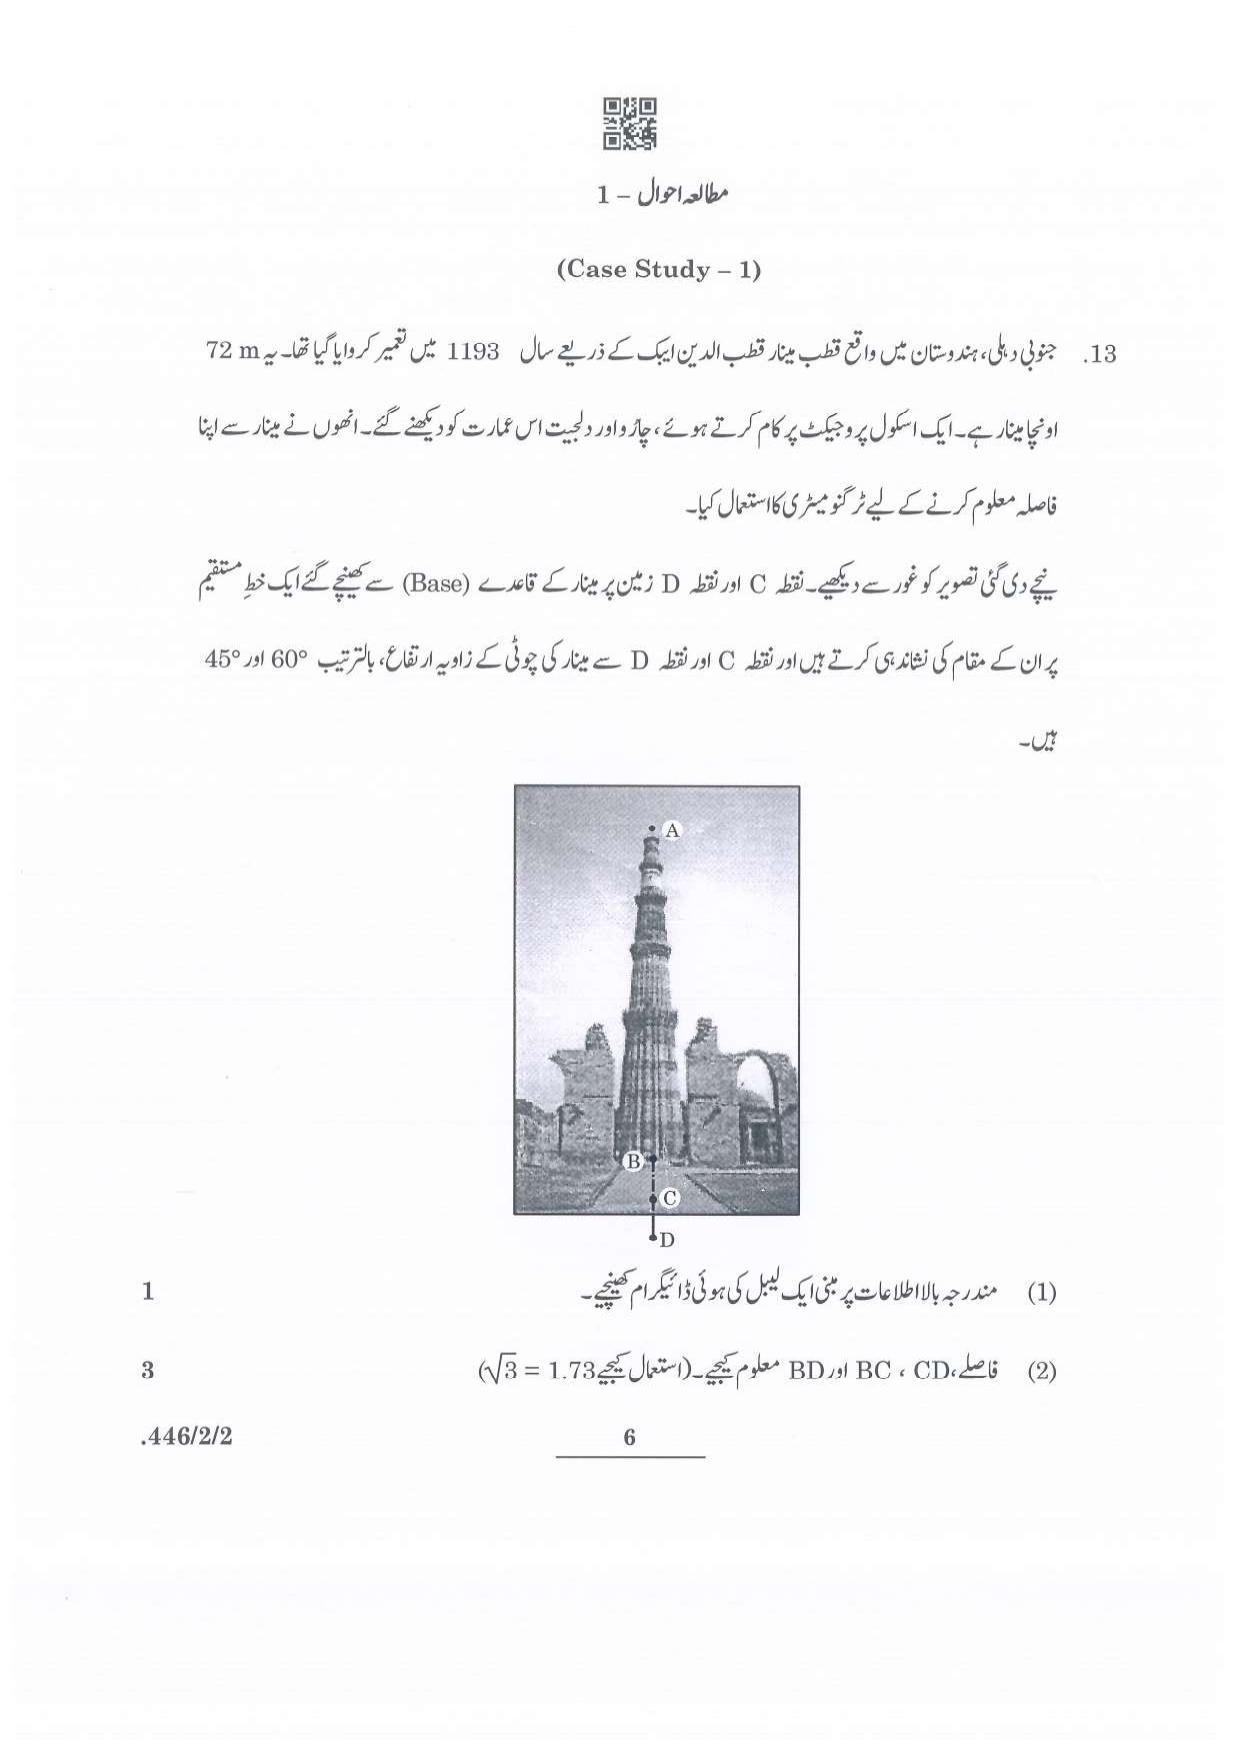 CBSE Class 10 Maths Basic - Urdu (446/2/2 - SET 2) 2022 Question Paper - Page 6